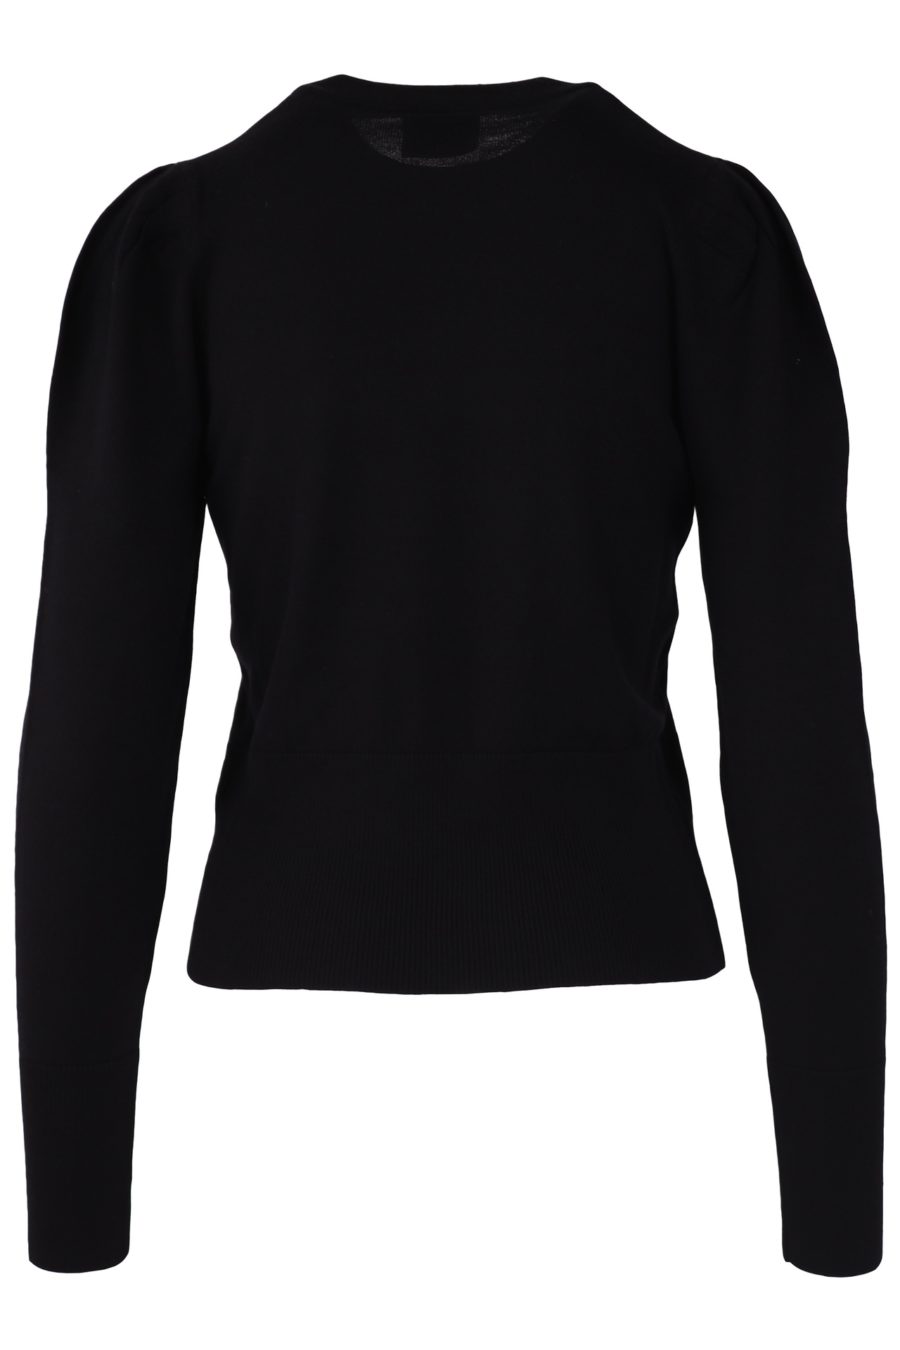 Jersey Versace Jeans Couture negra con logo morado - 93b04d0d1317eb2c1a1076ca8500343fee2a8d61